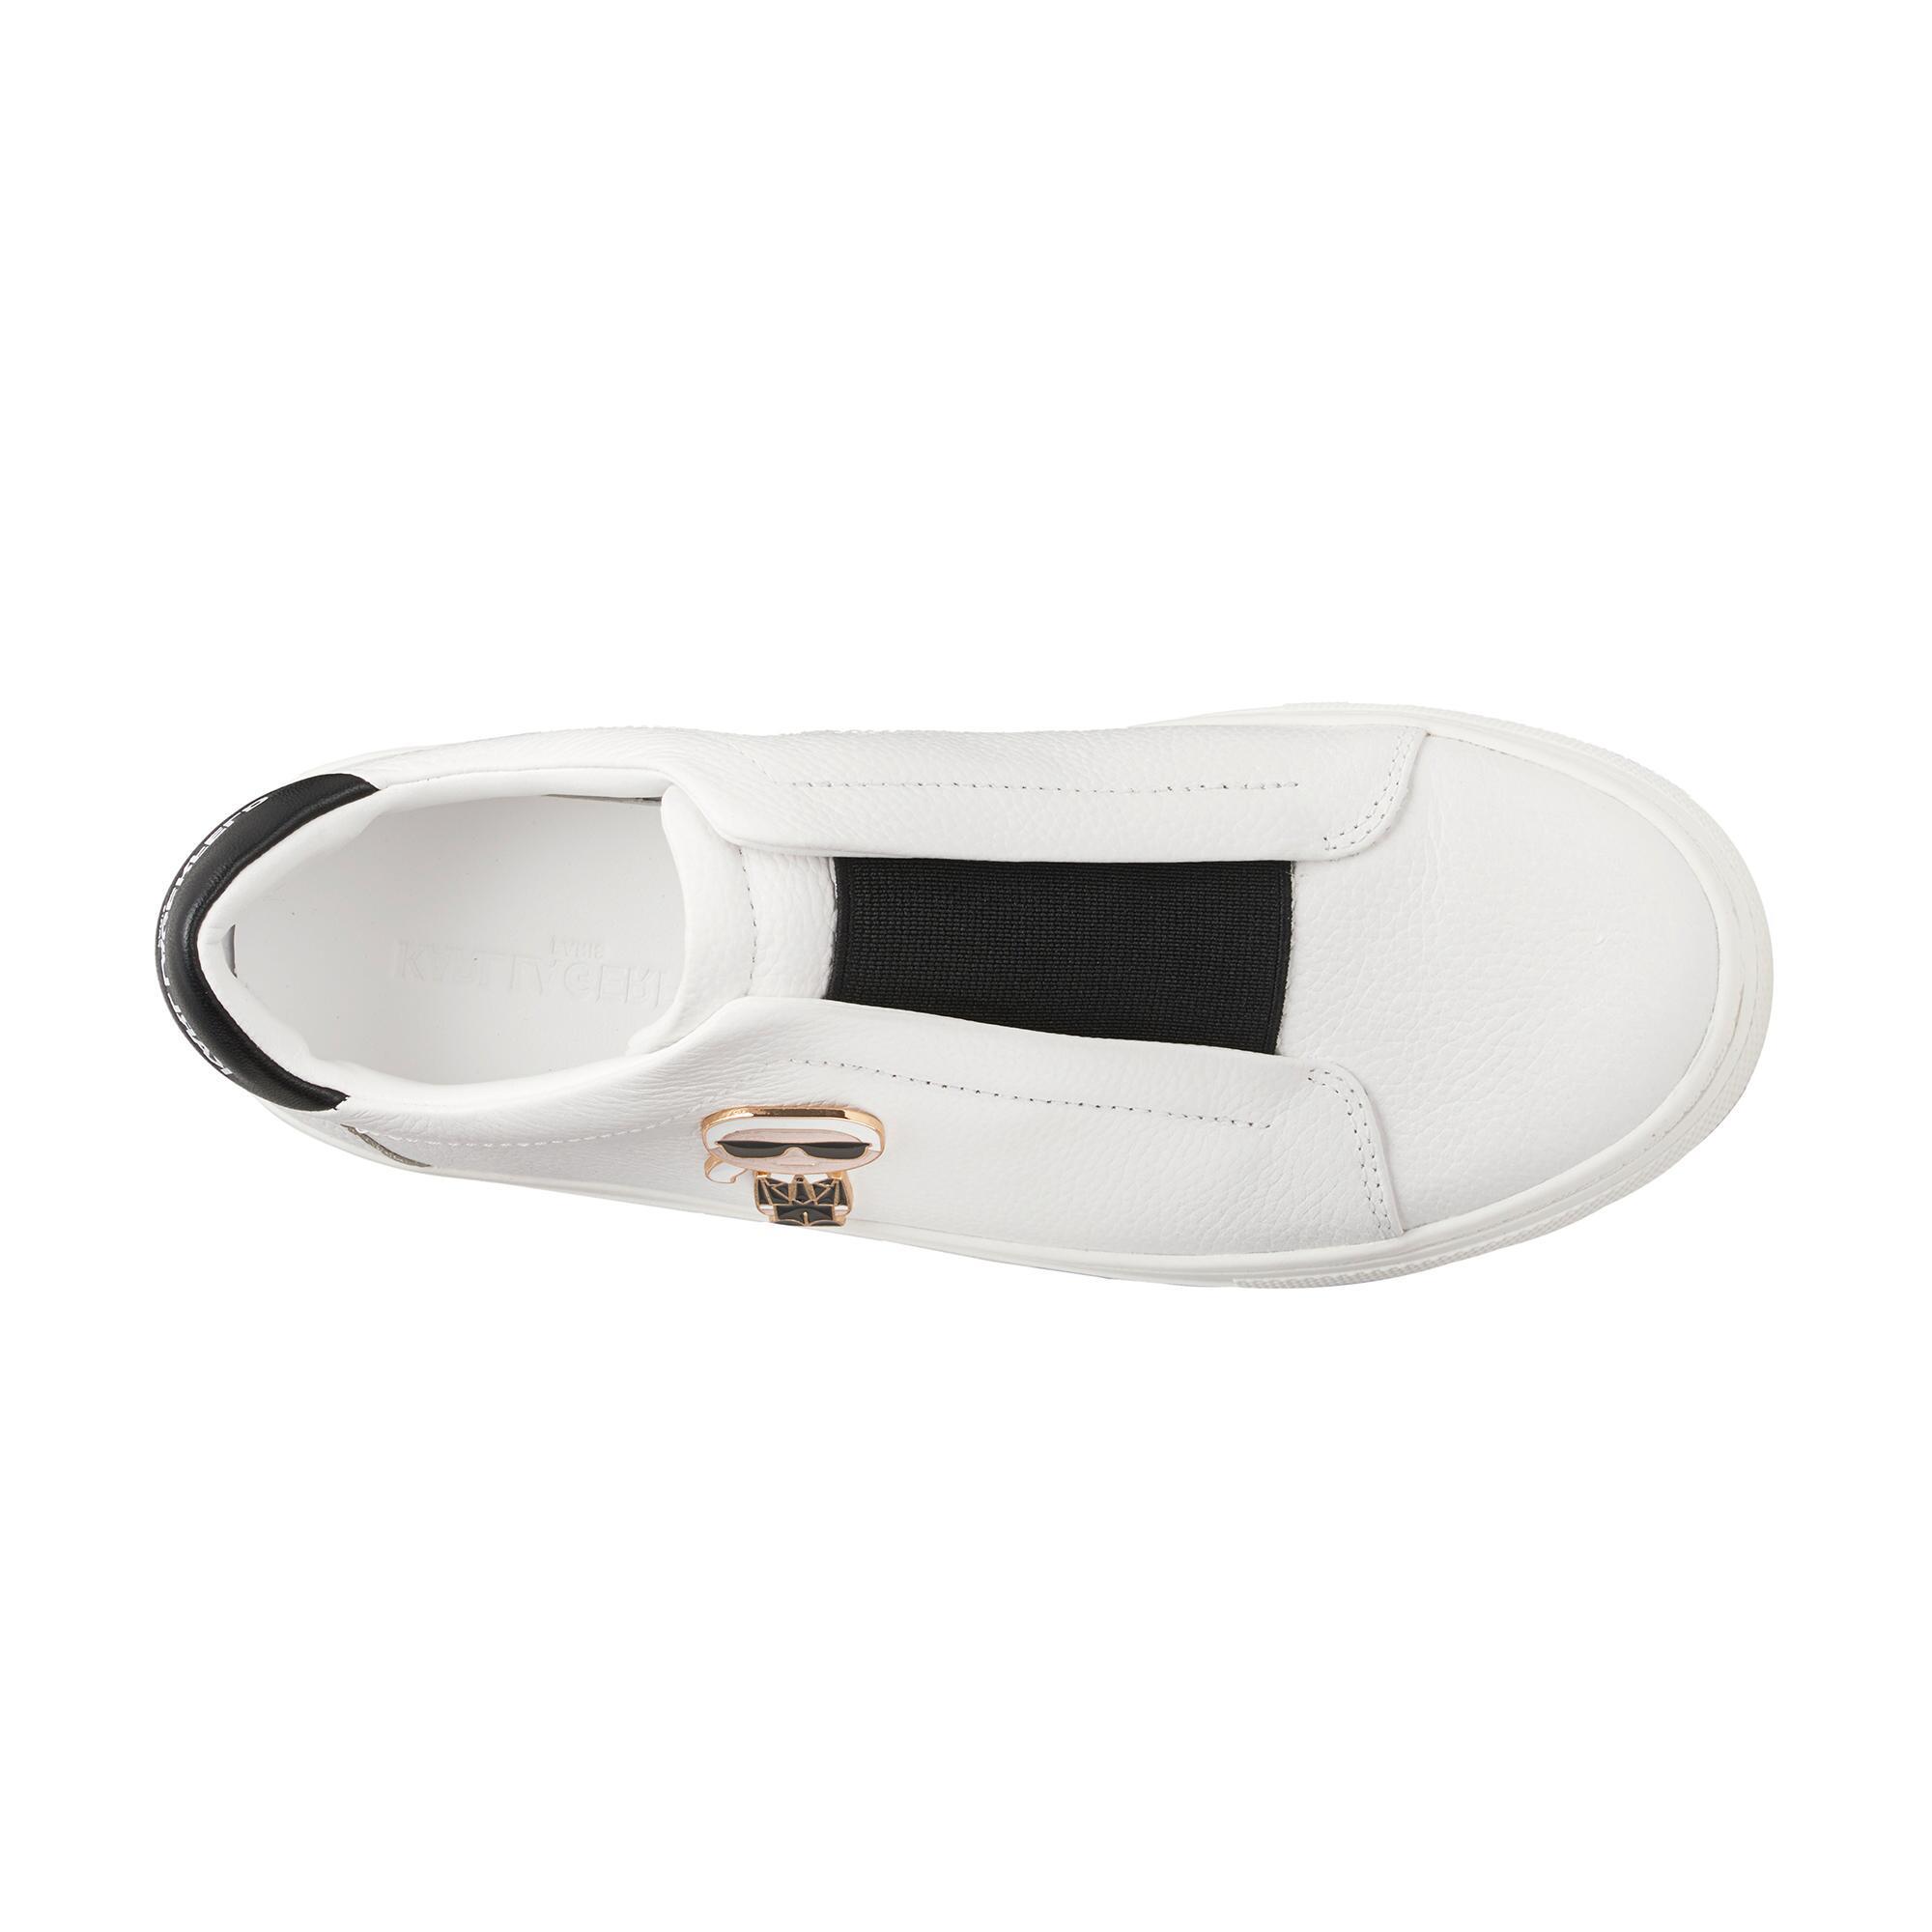 Karl Lagerfeld Rubber Ceci Slip On Sneaker in Bright White/Black (White) -  Lyst